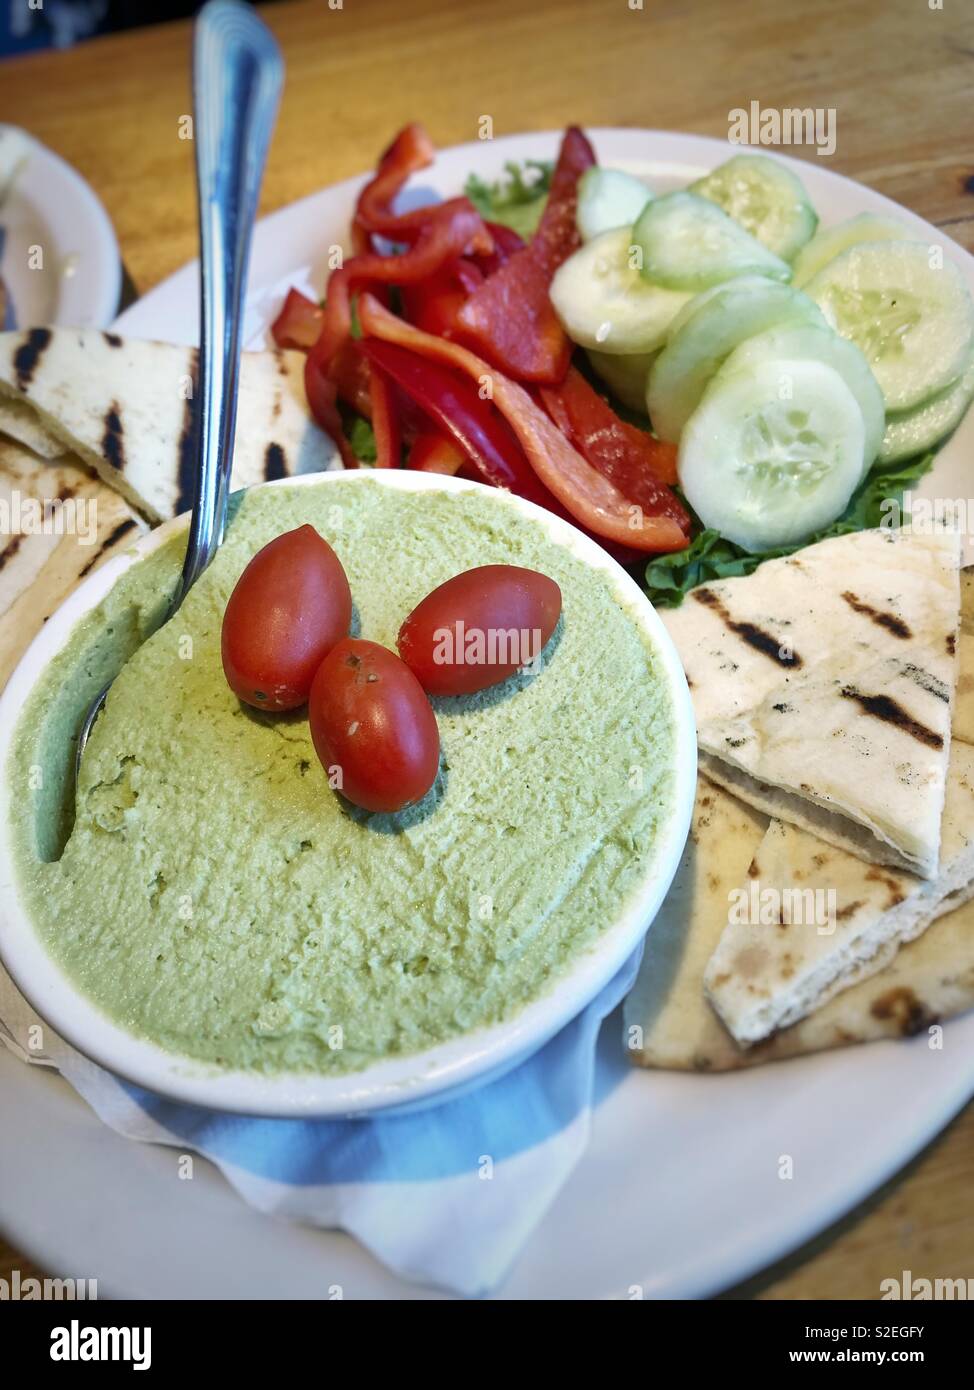 Fancy vegan edamame hummus plate with veggies Stock Photo